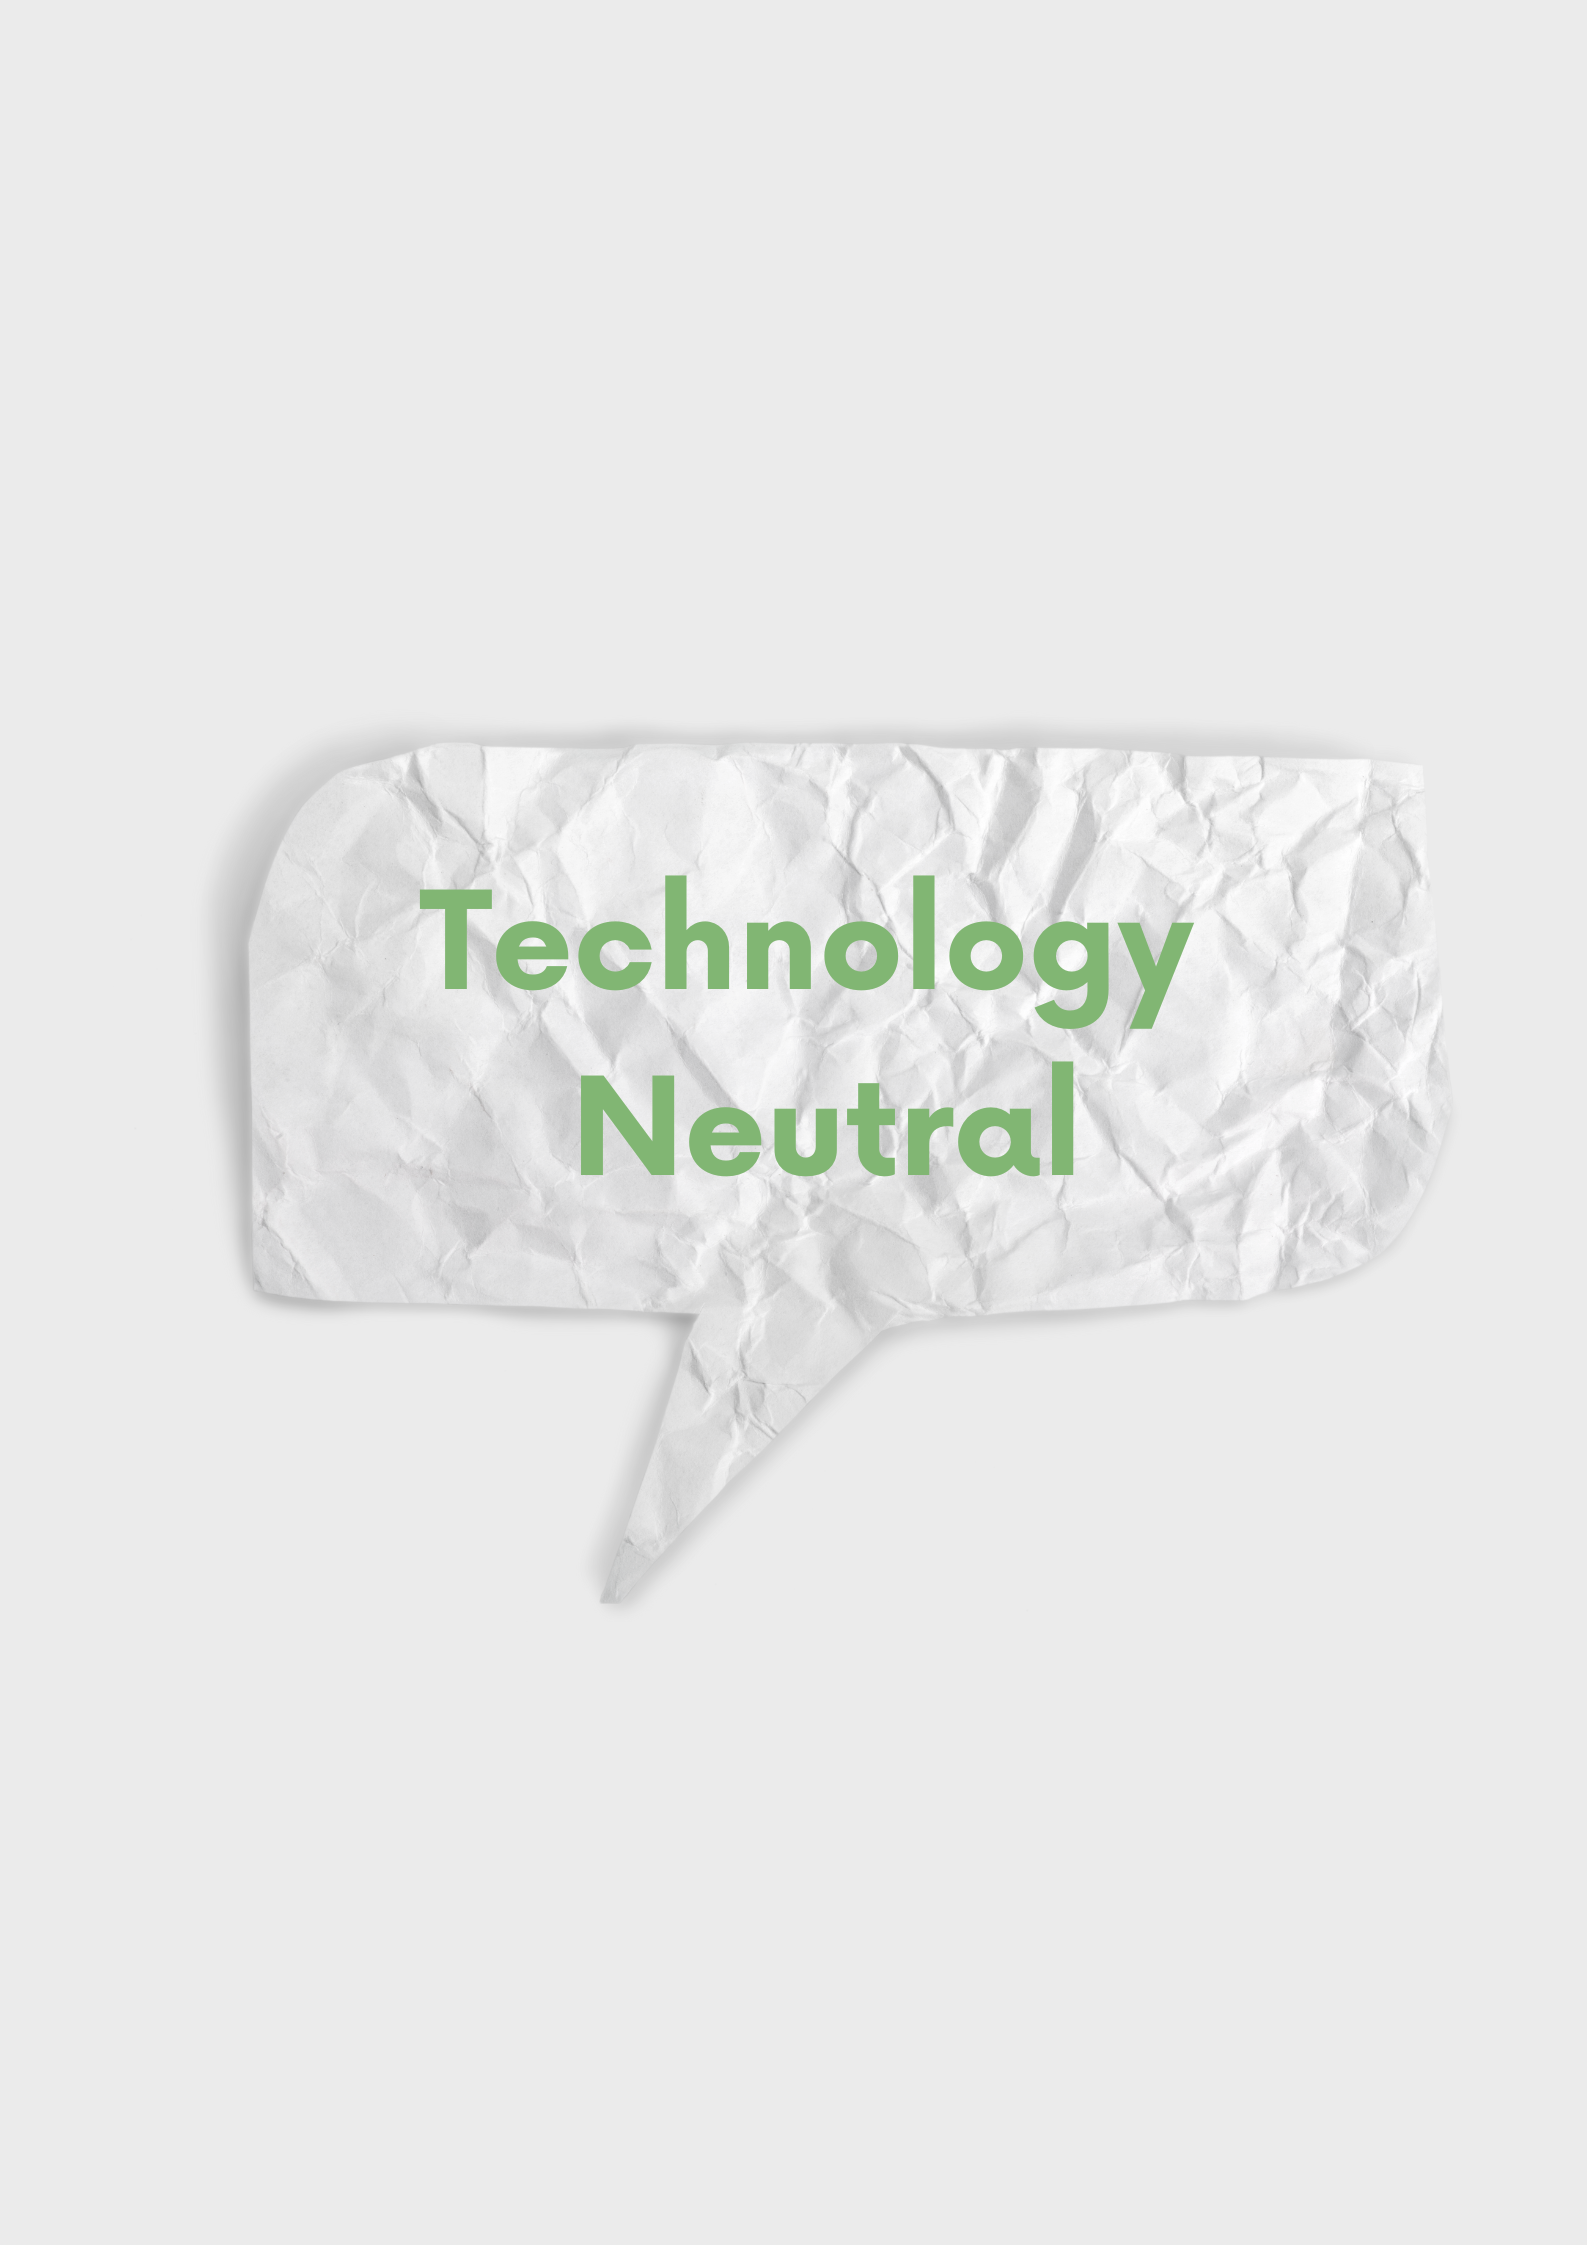 Technology Neutral